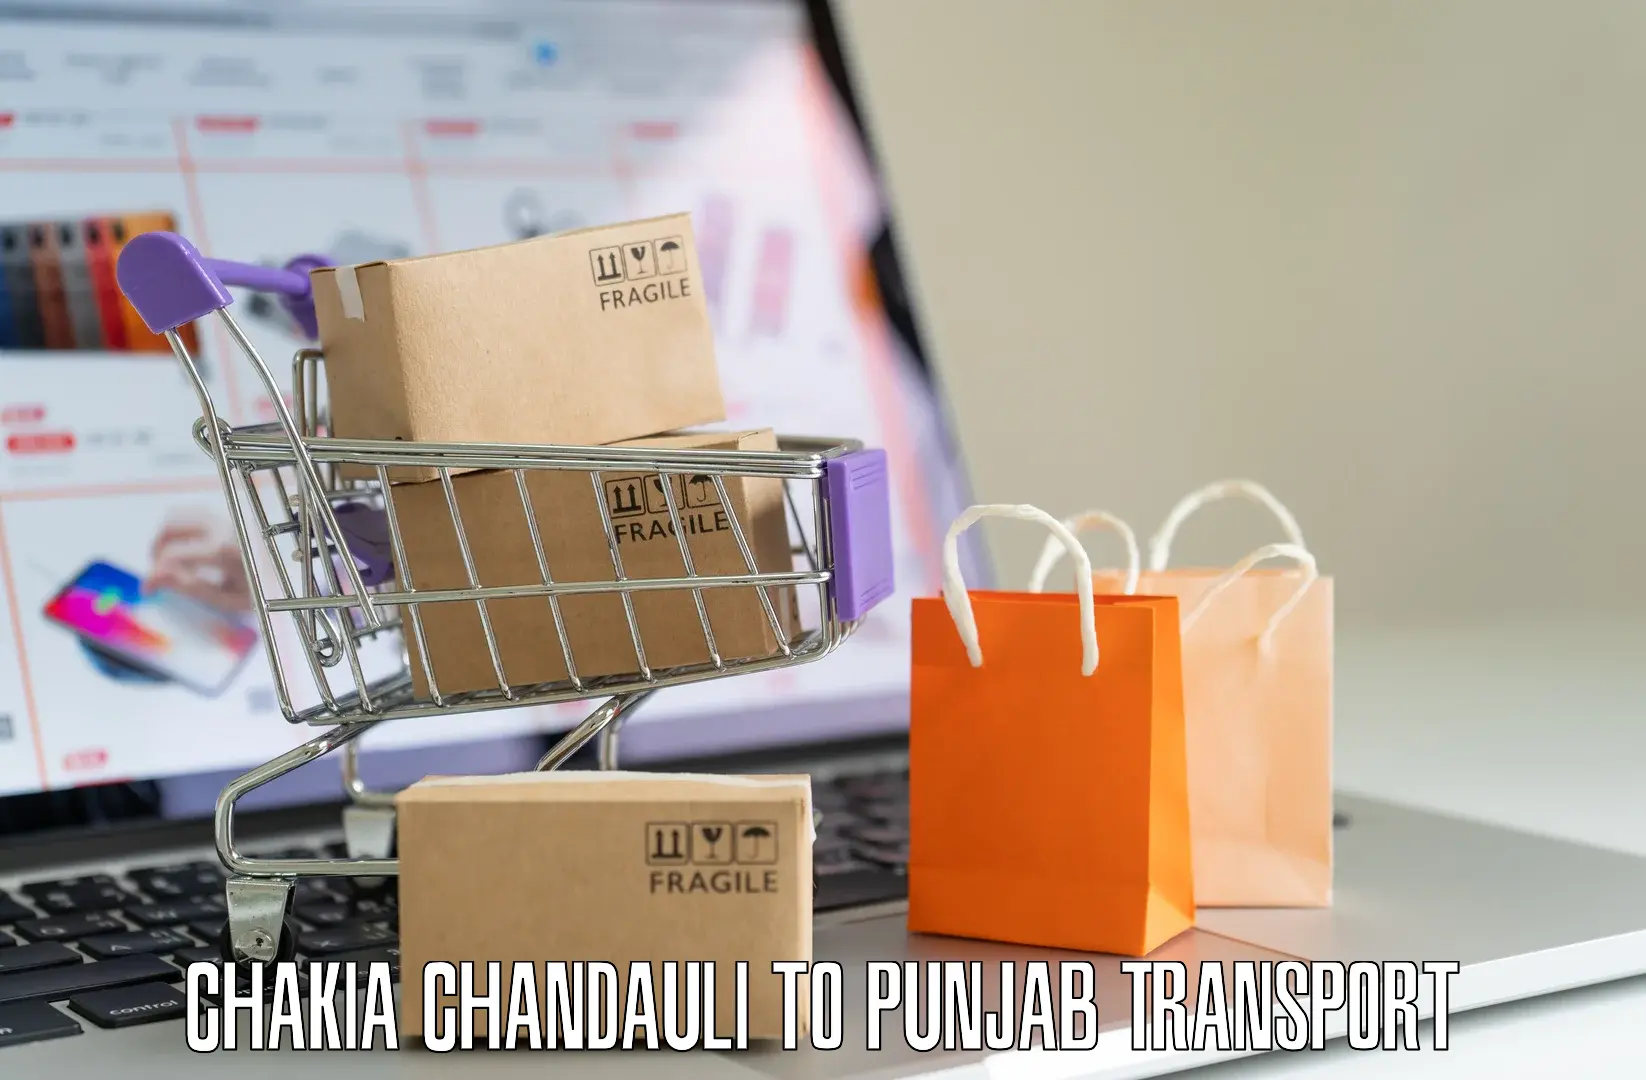 Truck transport companies in India Chakia Chandauli to Jalandhar